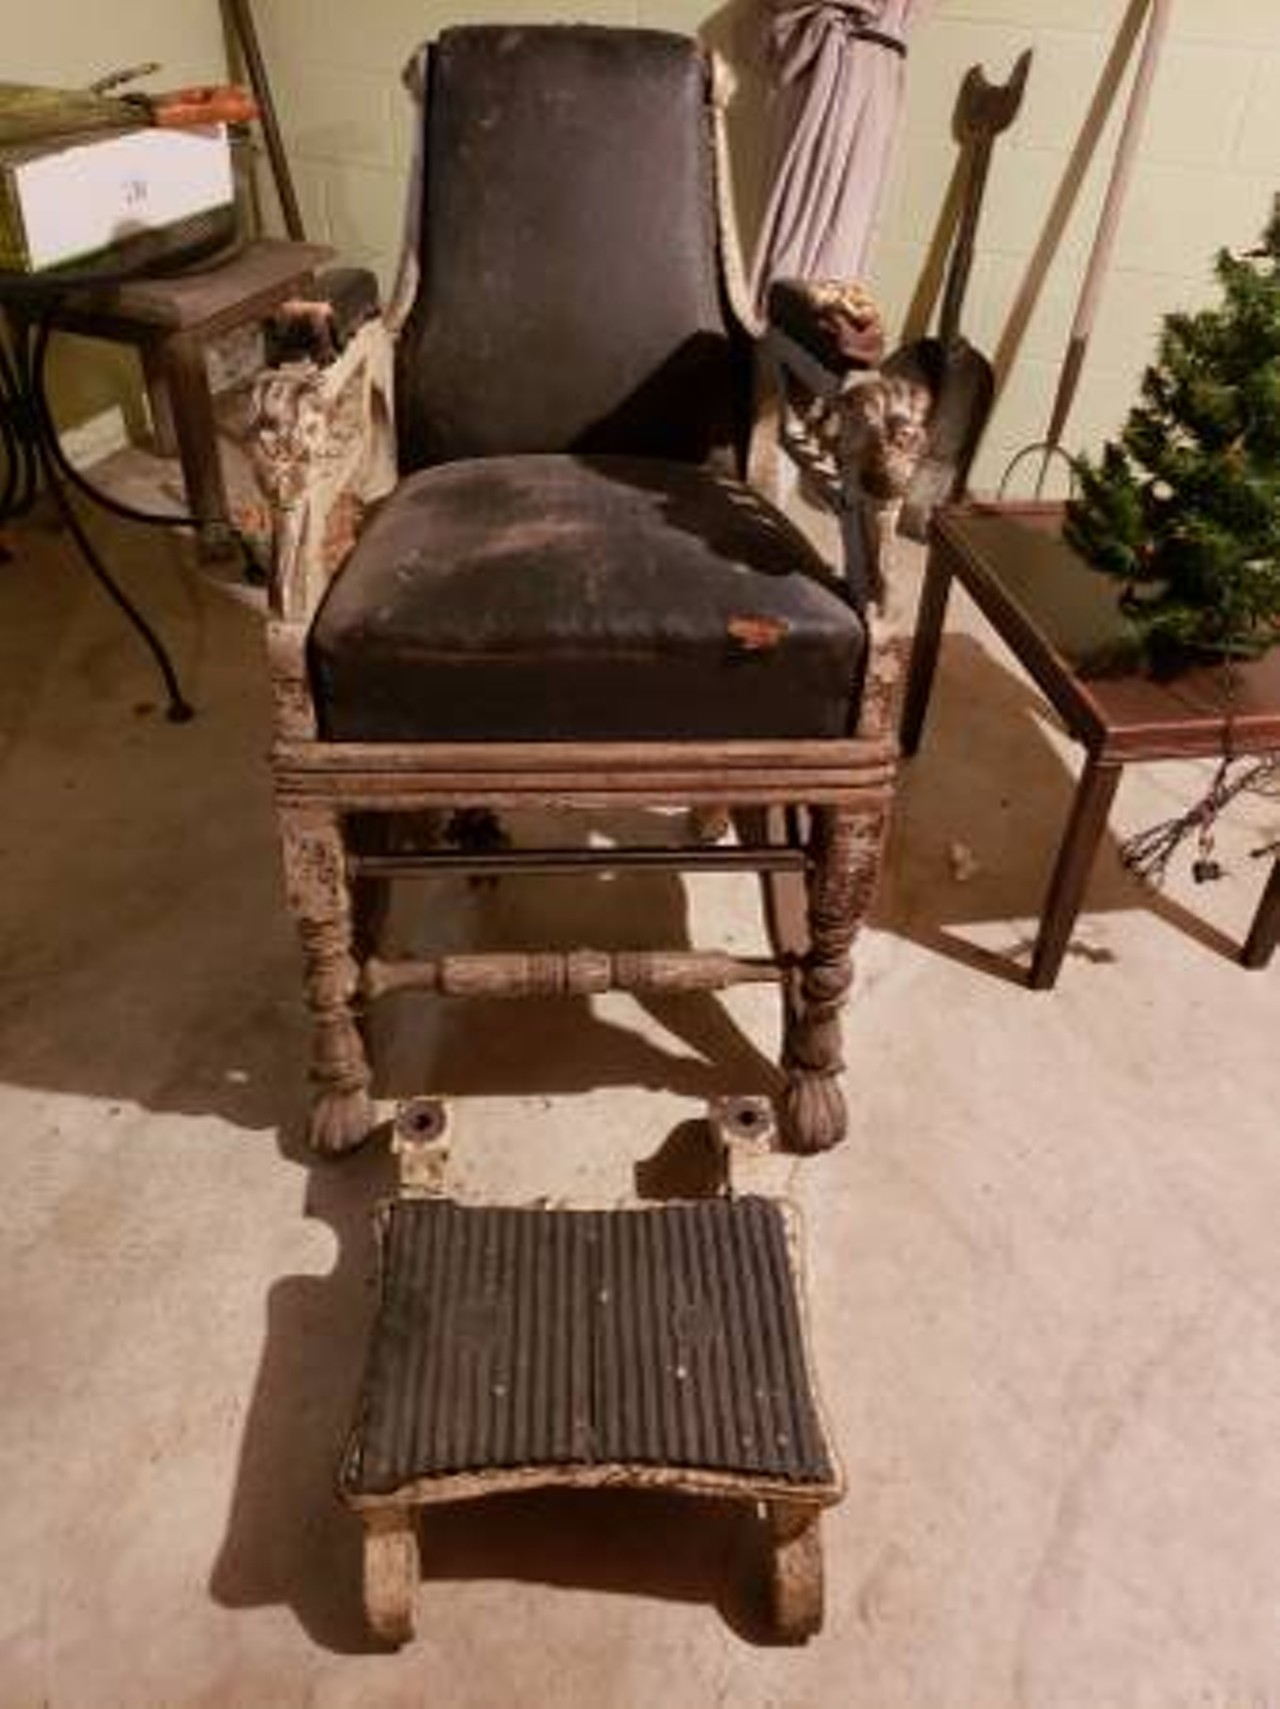 Antique Wooden Barber/Salon Chair ($525)
Talk about a conversation piece.
Photo via  Craigslist